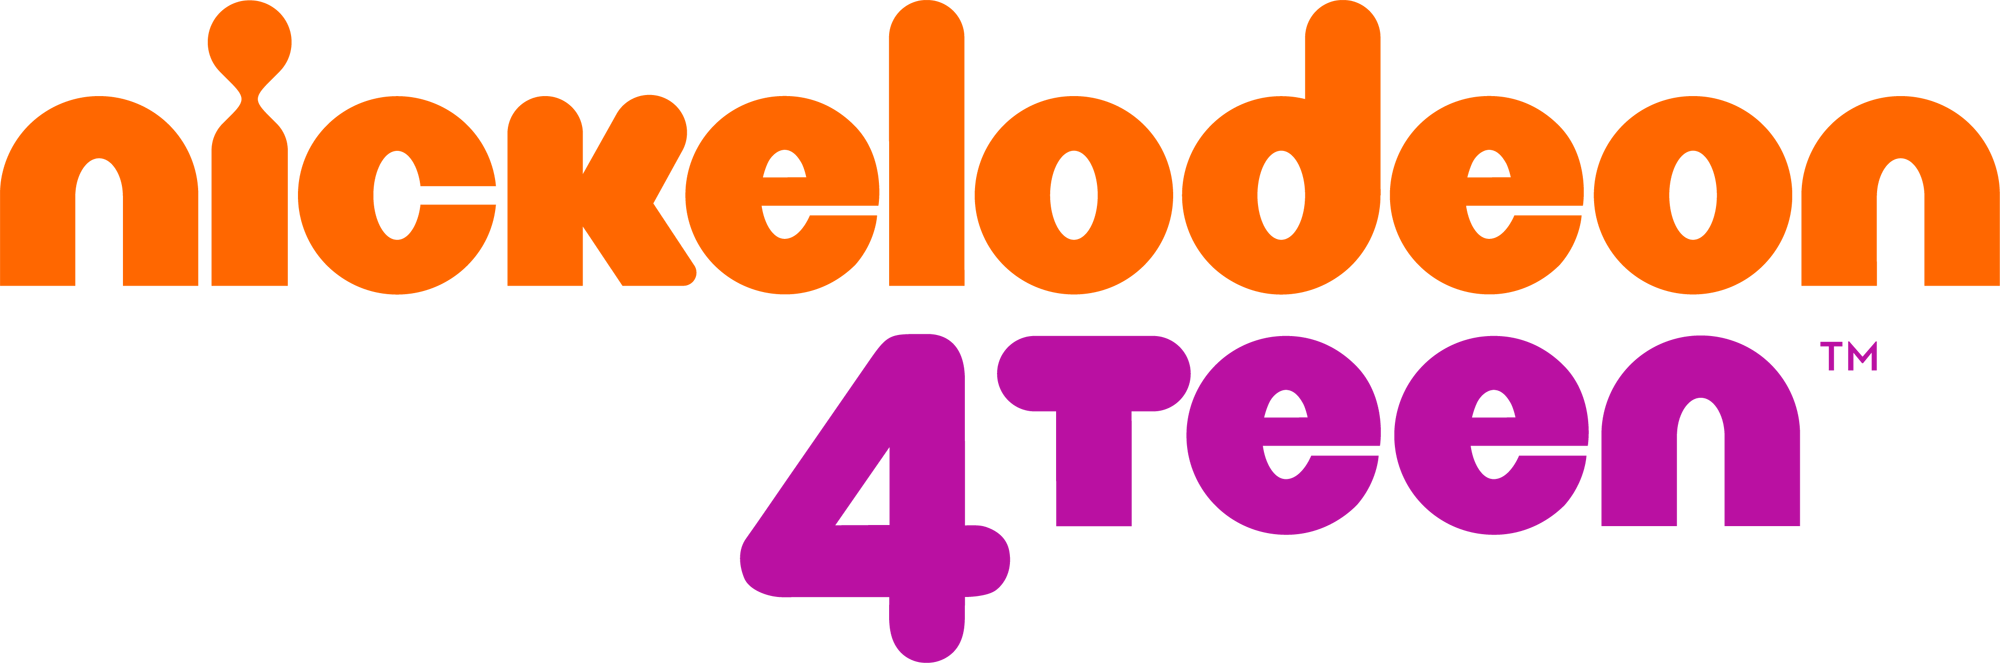 Nick channel. Никелодеон. Канал Nickelodeon. Телеканал Никелодеон. Nickelodeon логотип.